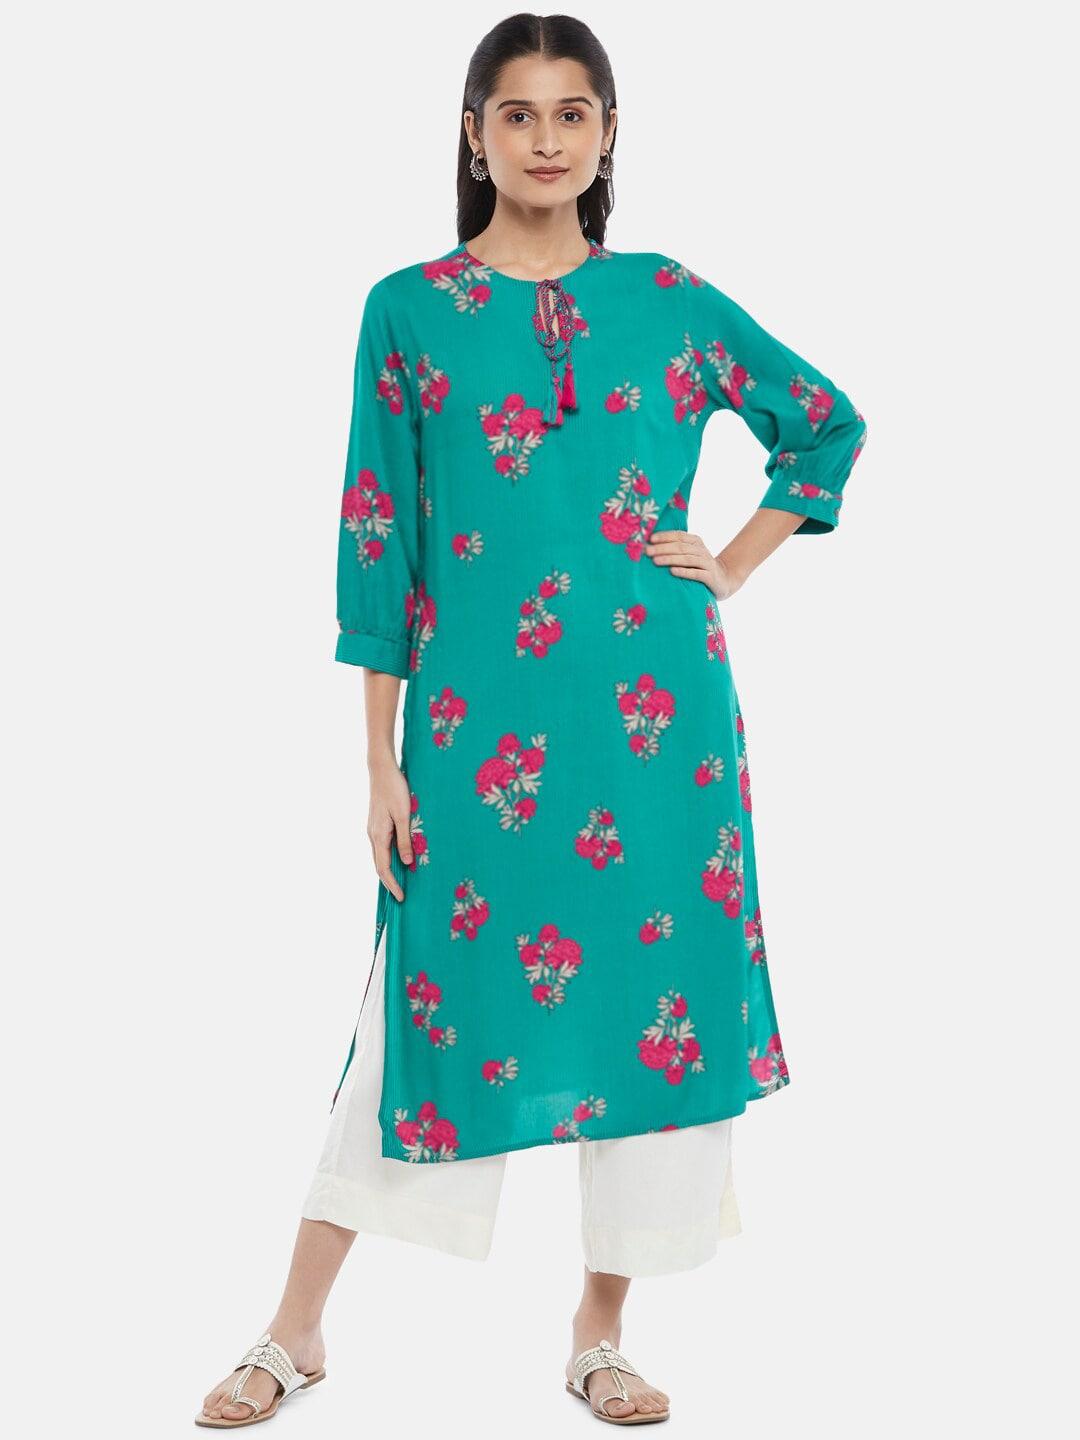 rangmanch by pantaloons women green & fuchsia pink floral printed cotton kurta